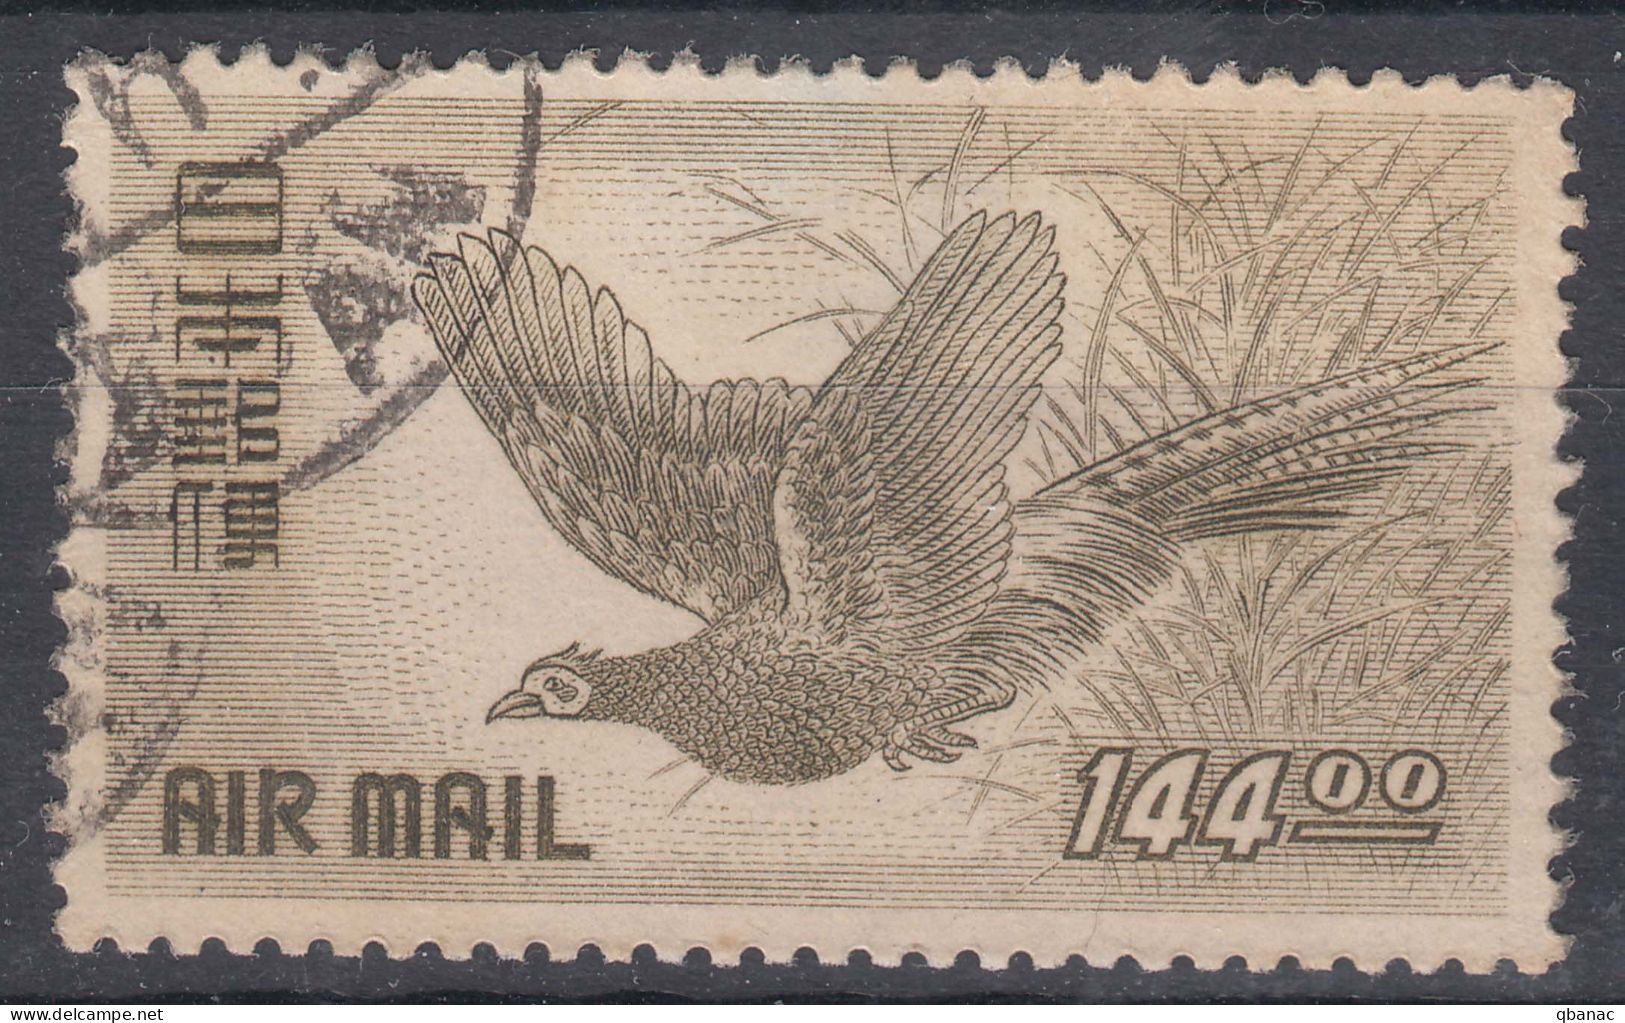 Japan 1950 Birds Airmail Mi#496 Used - Oblitérés